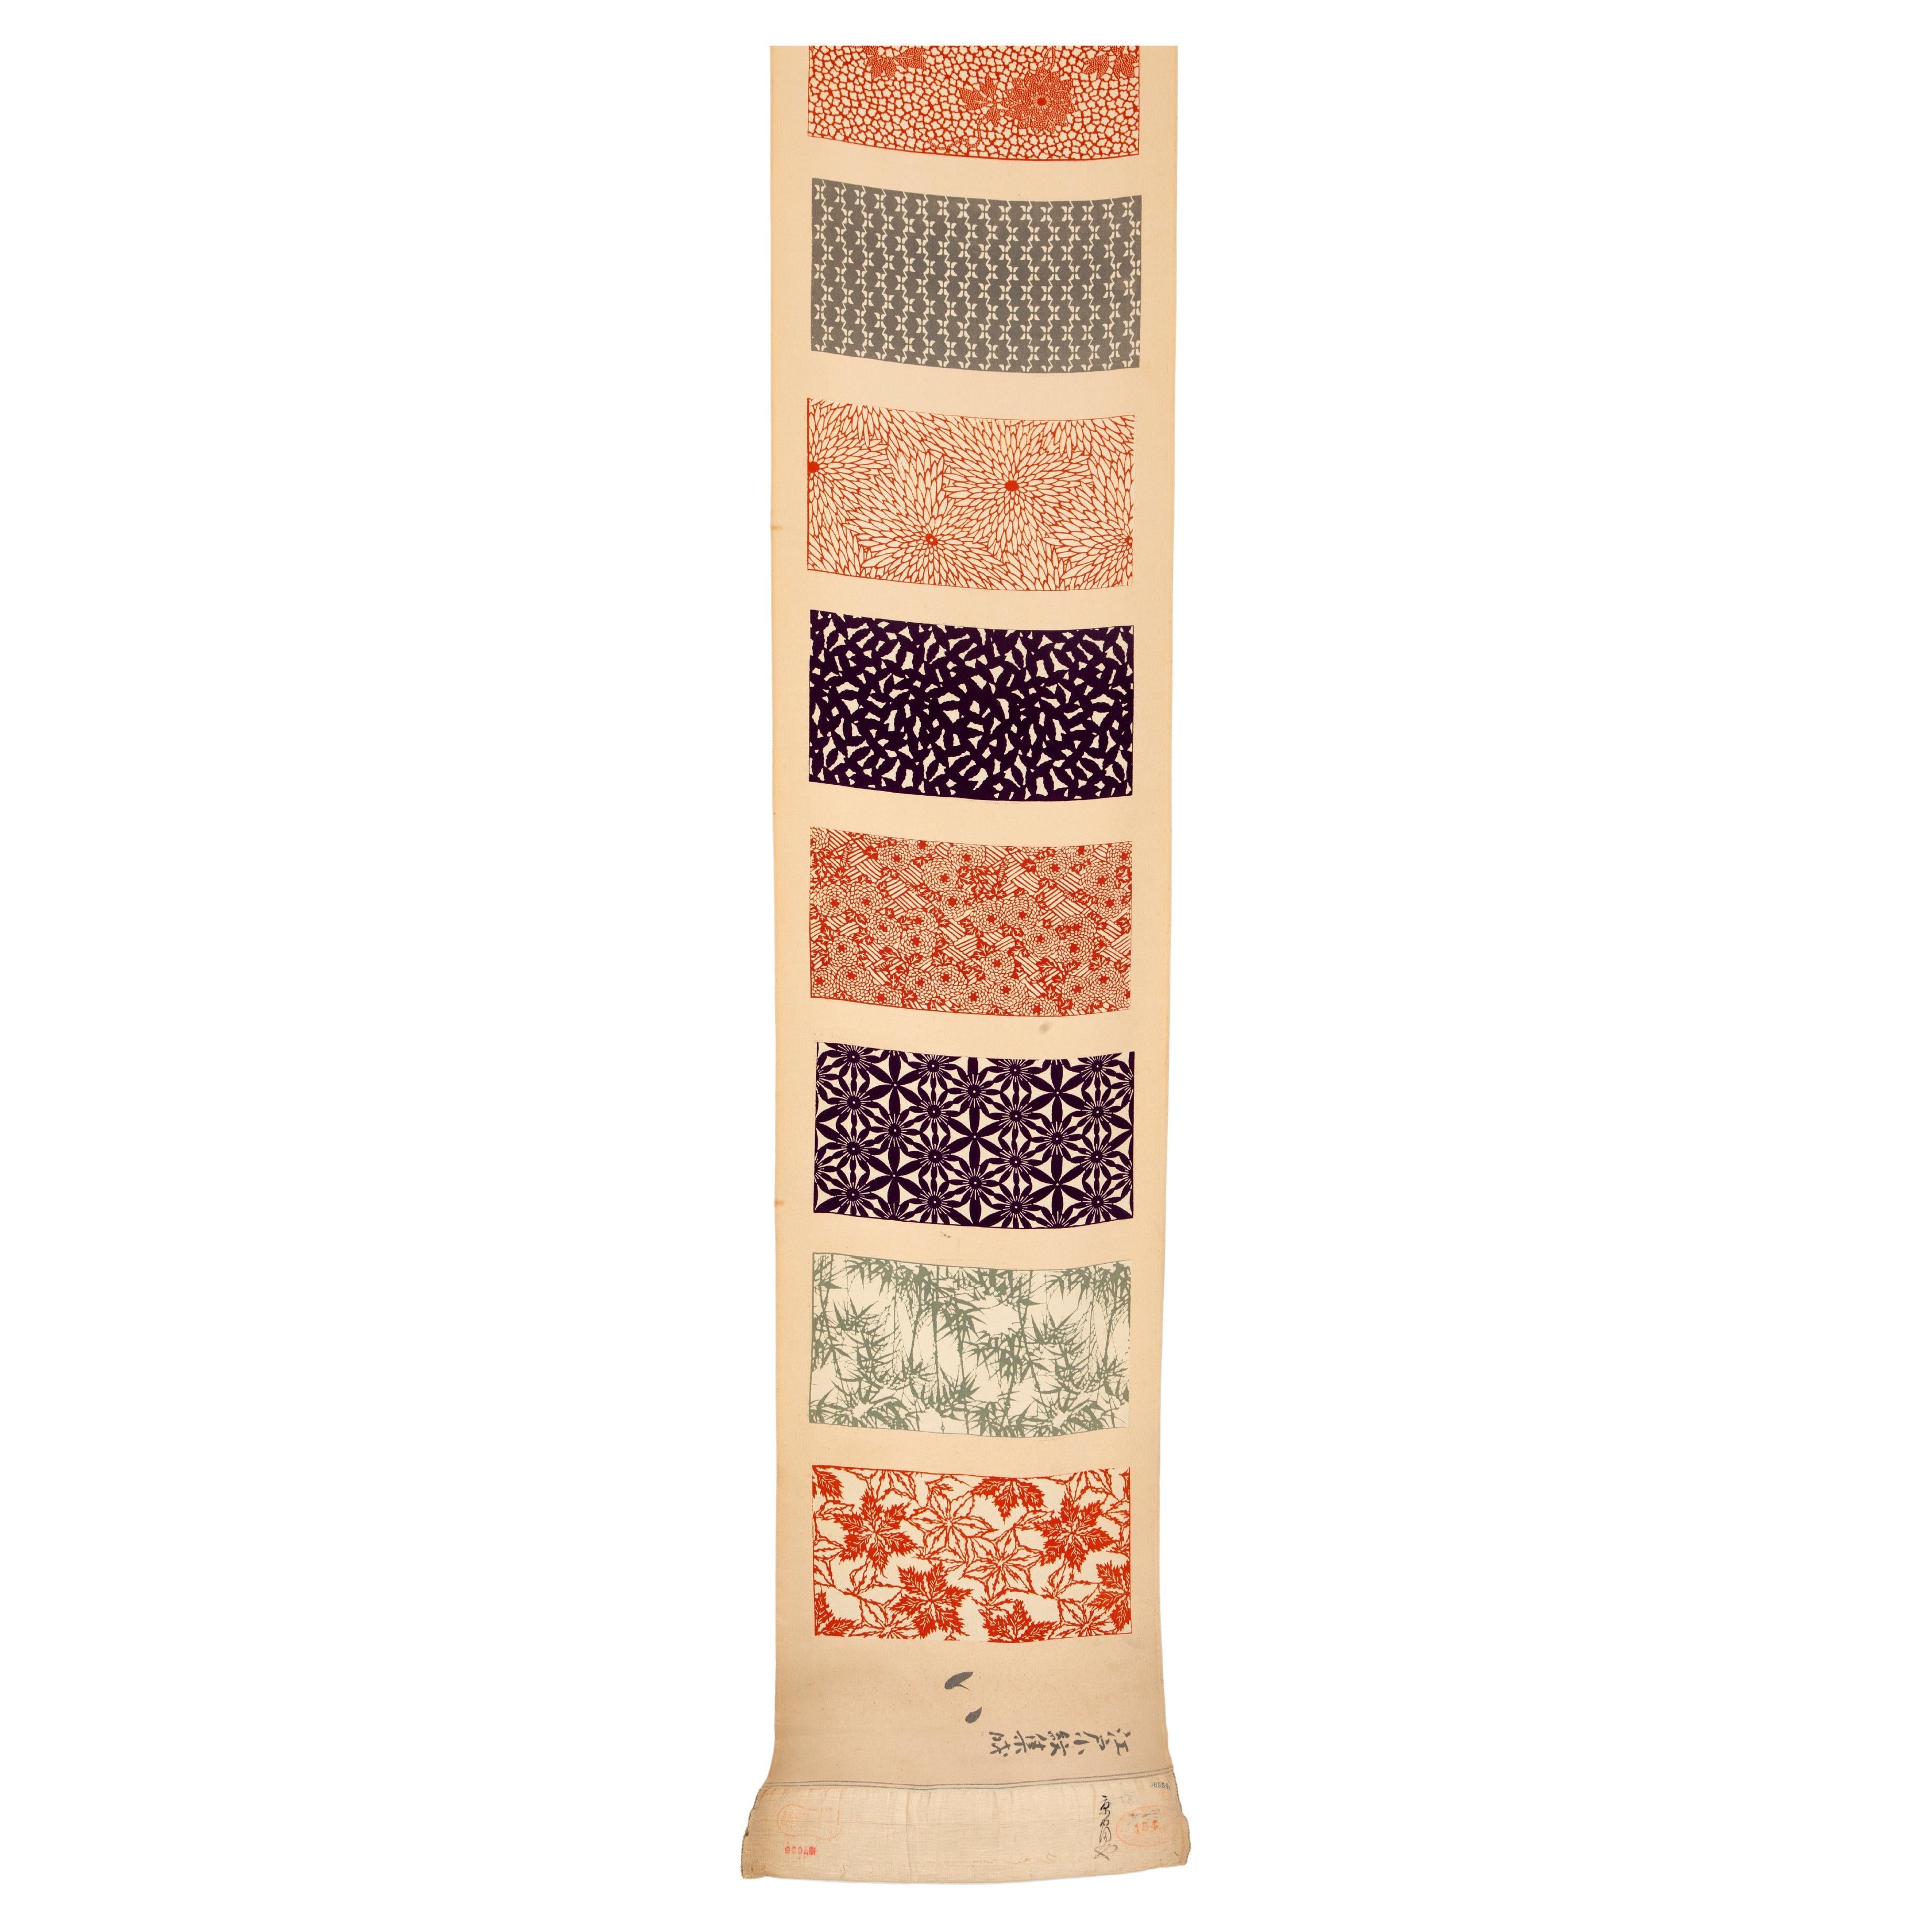 Rare and Beautiful Japanese Chirimen Silk Fabric Sampler '3rd of 4'